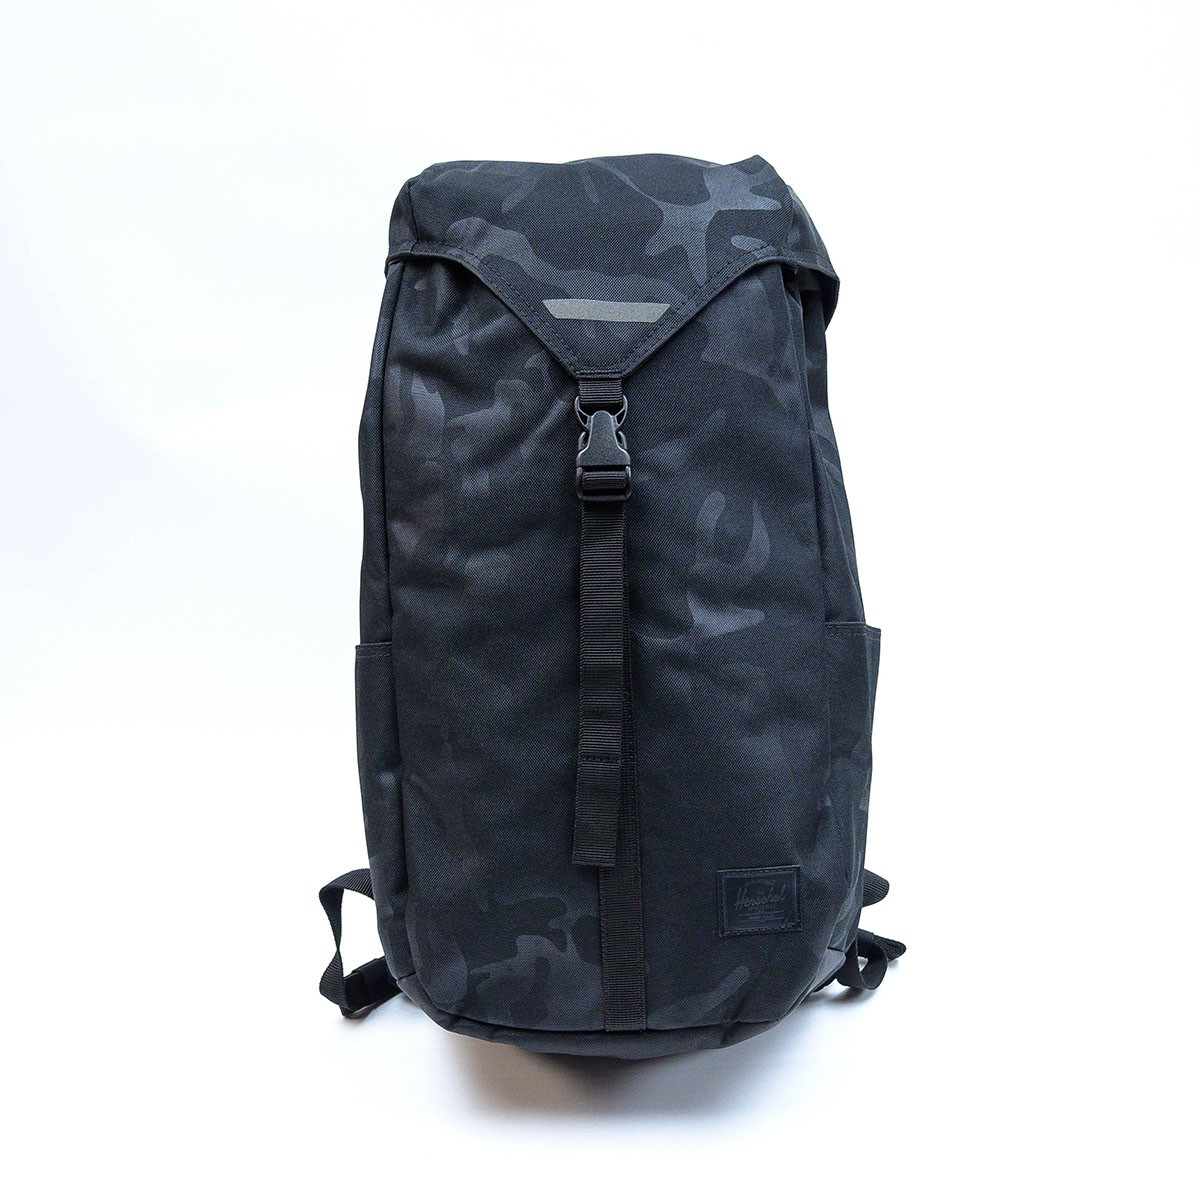 Herschel Supply Co. Delta Thompson Backpack Black/Tonal Camo 黑色暗迷彩